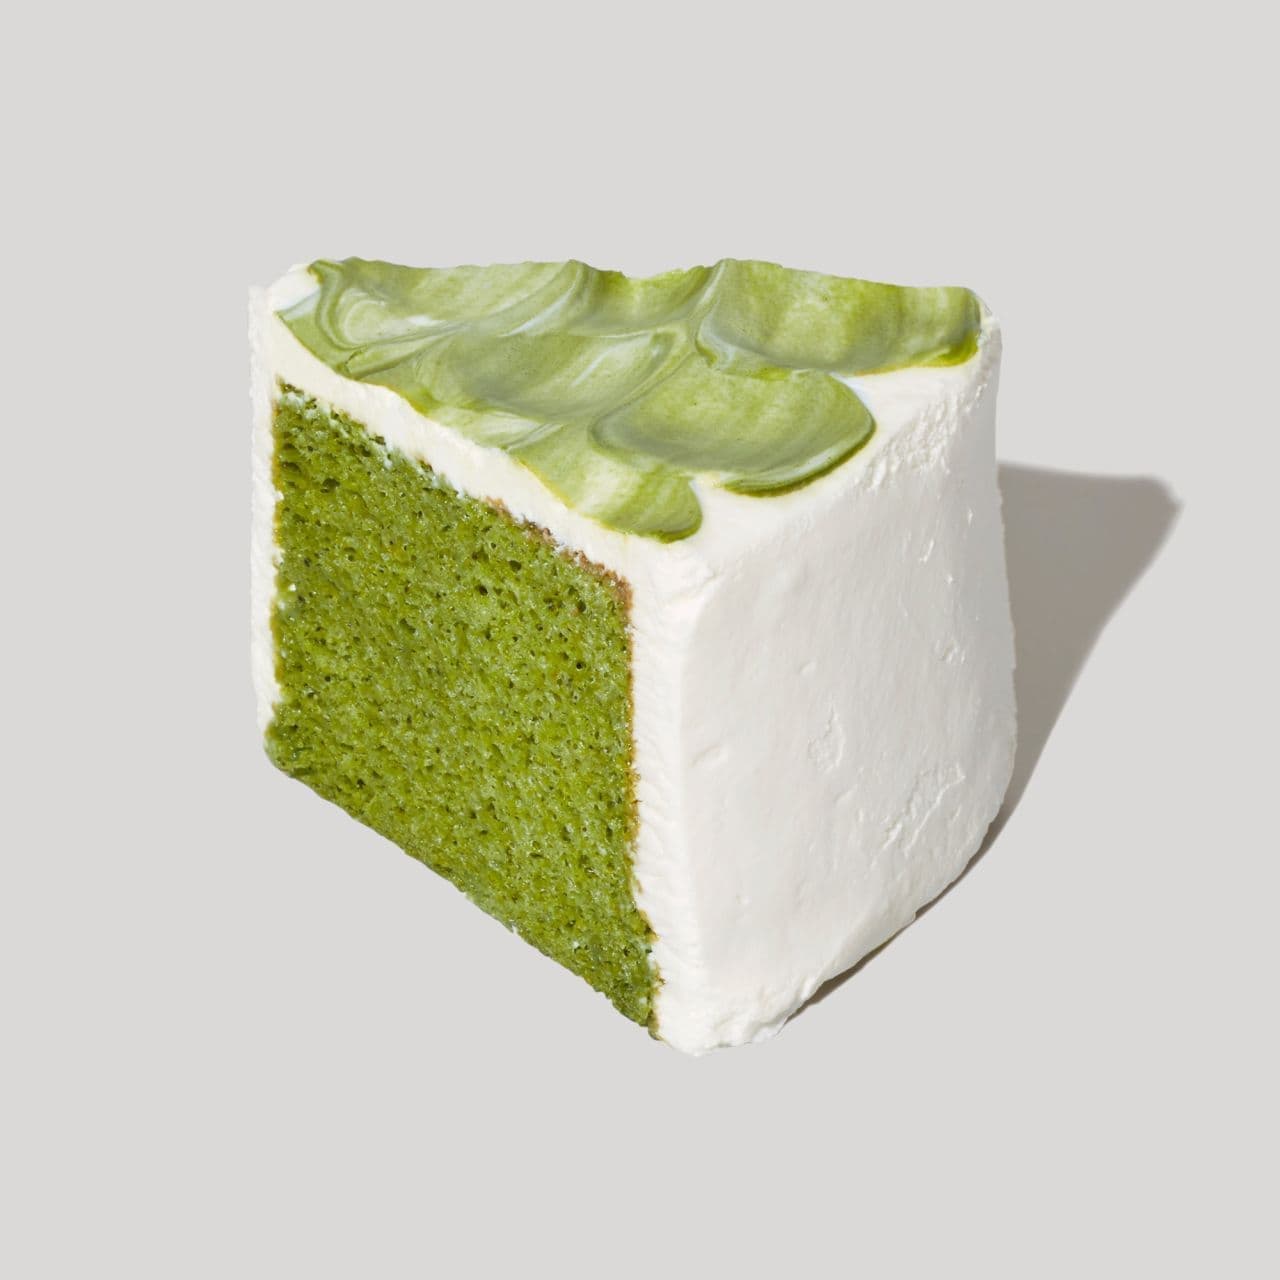 Starbucks "Uji green tea chiffon cake